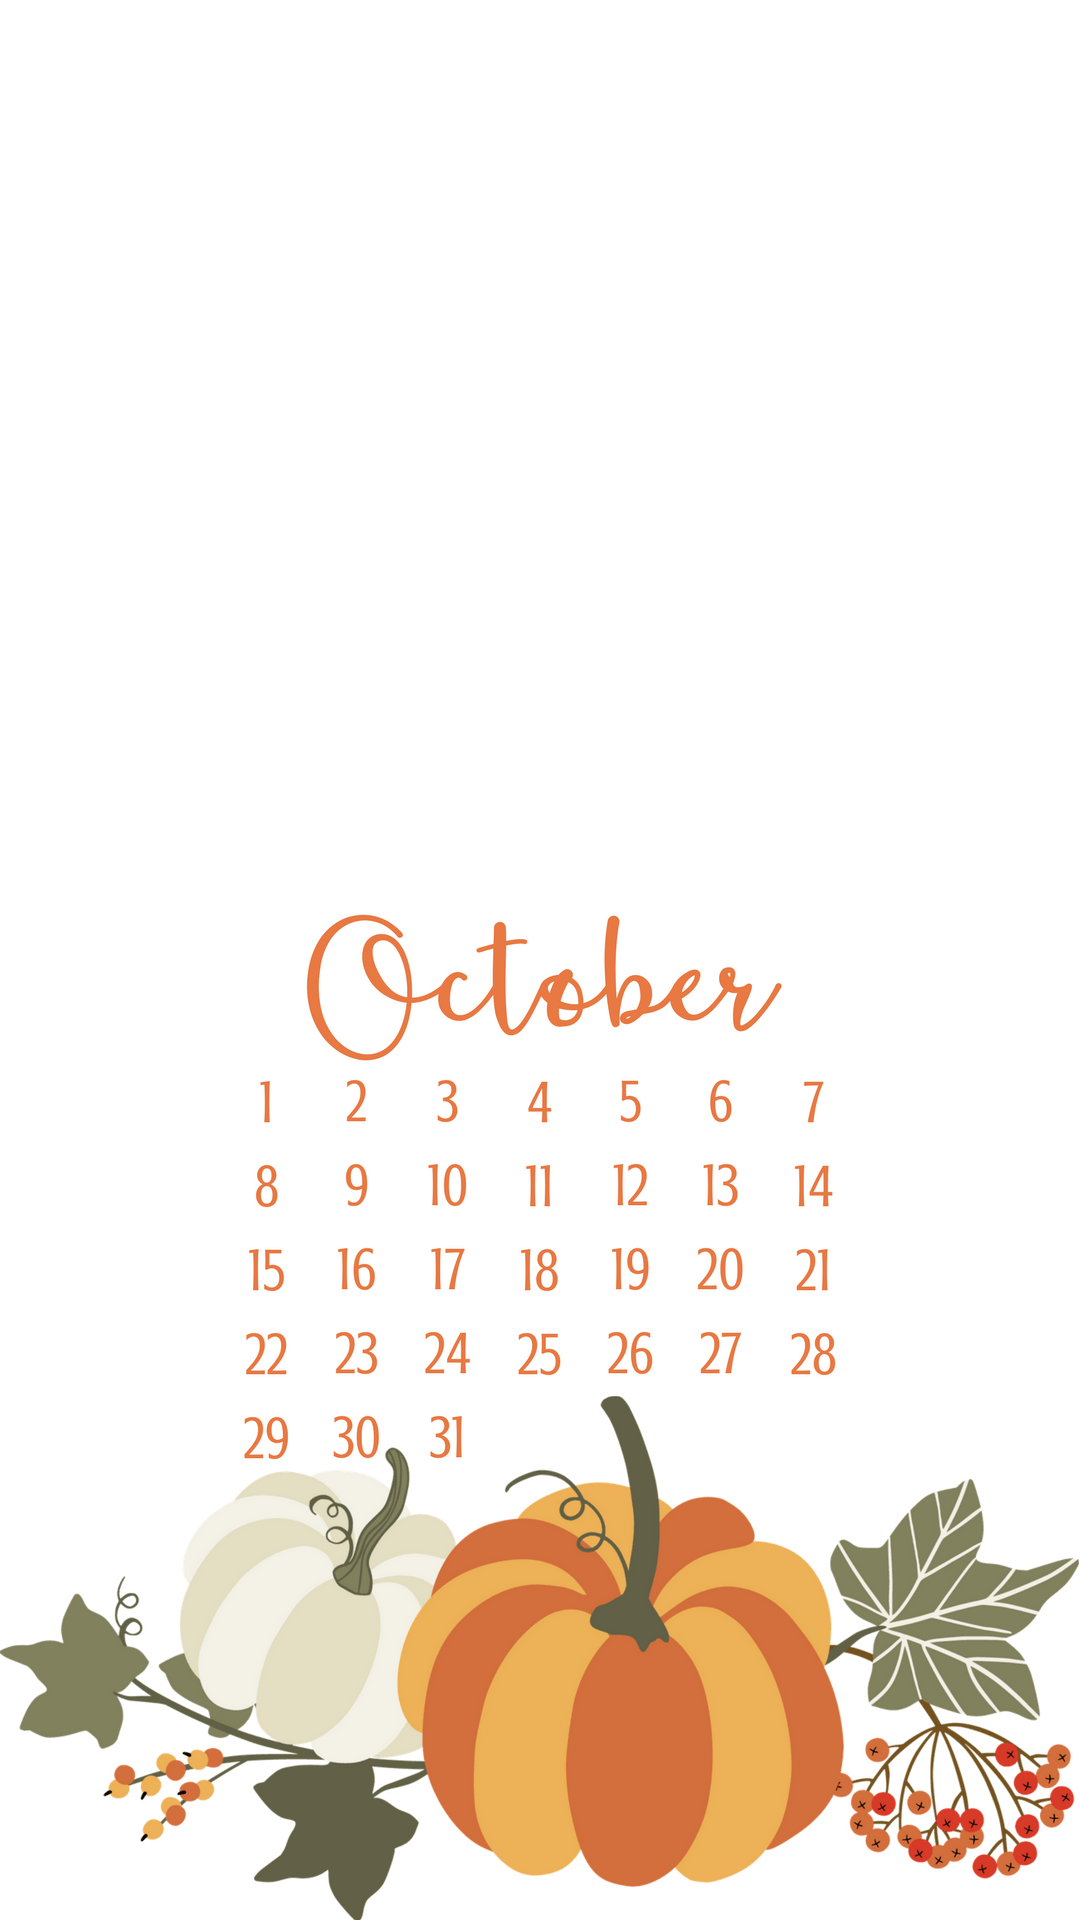 October Calendar Phone Wallpaper - October Calendar Wallpaper Phone -  1080x1920 Wallpaper 